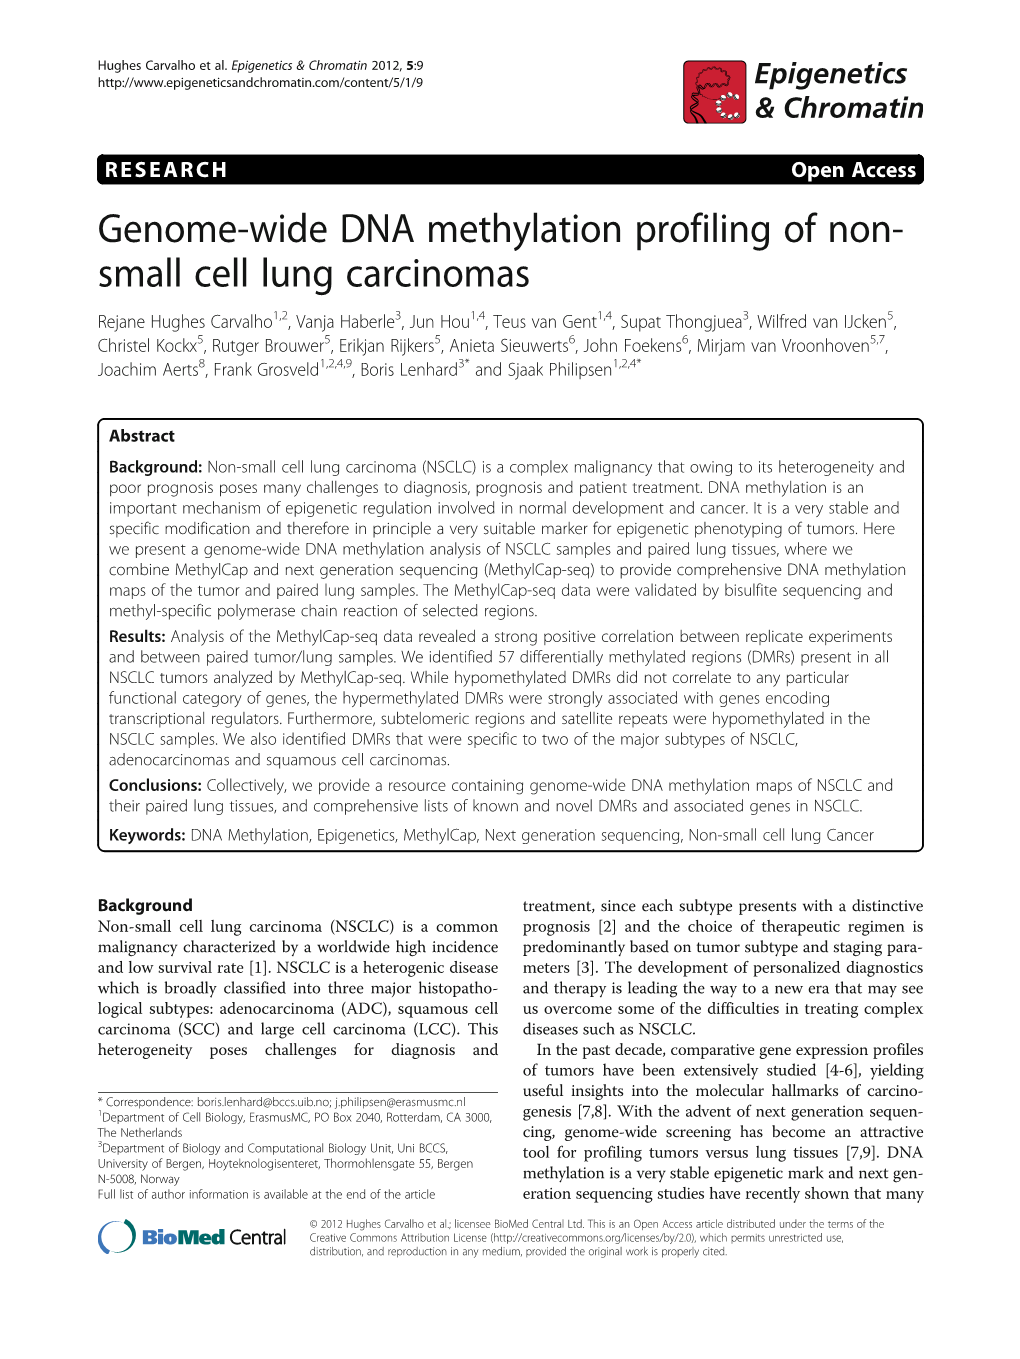 Genome-Wide DNA Methylation Profiling Of